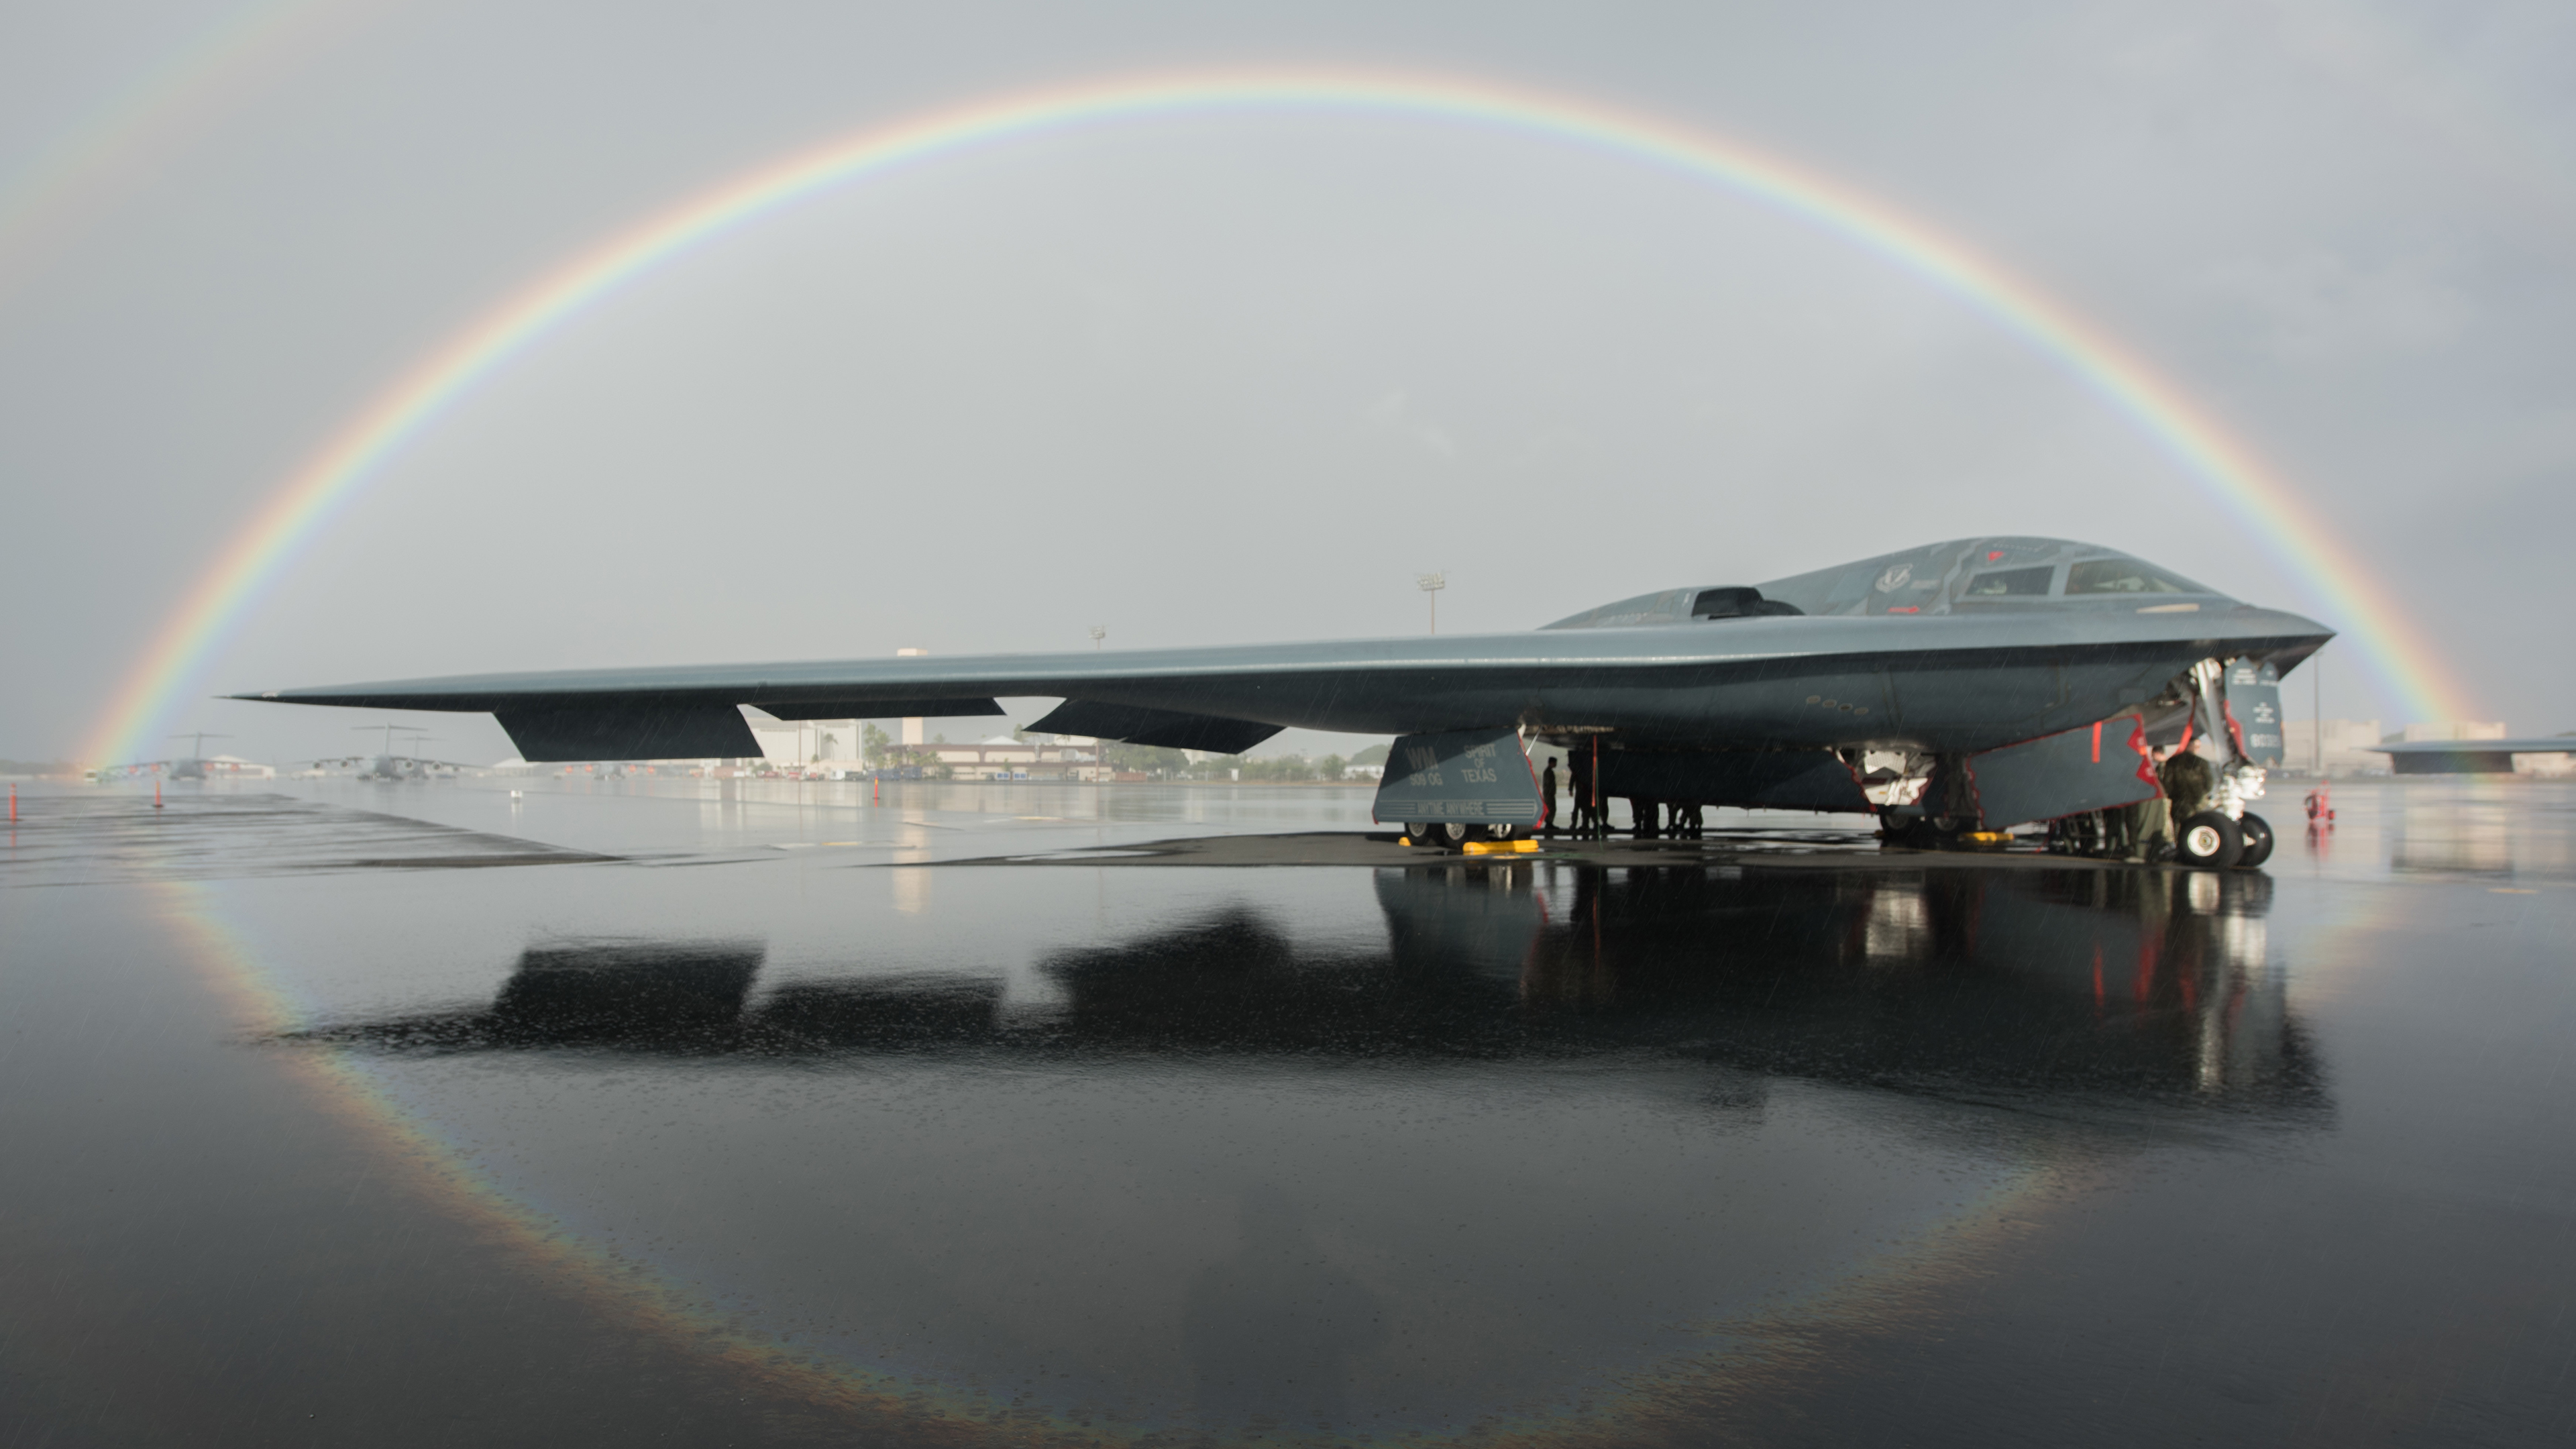 General 3840x2160 Northrop Grumman B-2 Spirit Bomber strategic bomber stealth rainbows rain US Air Force technology military vehicle military aircraft aircraft sky